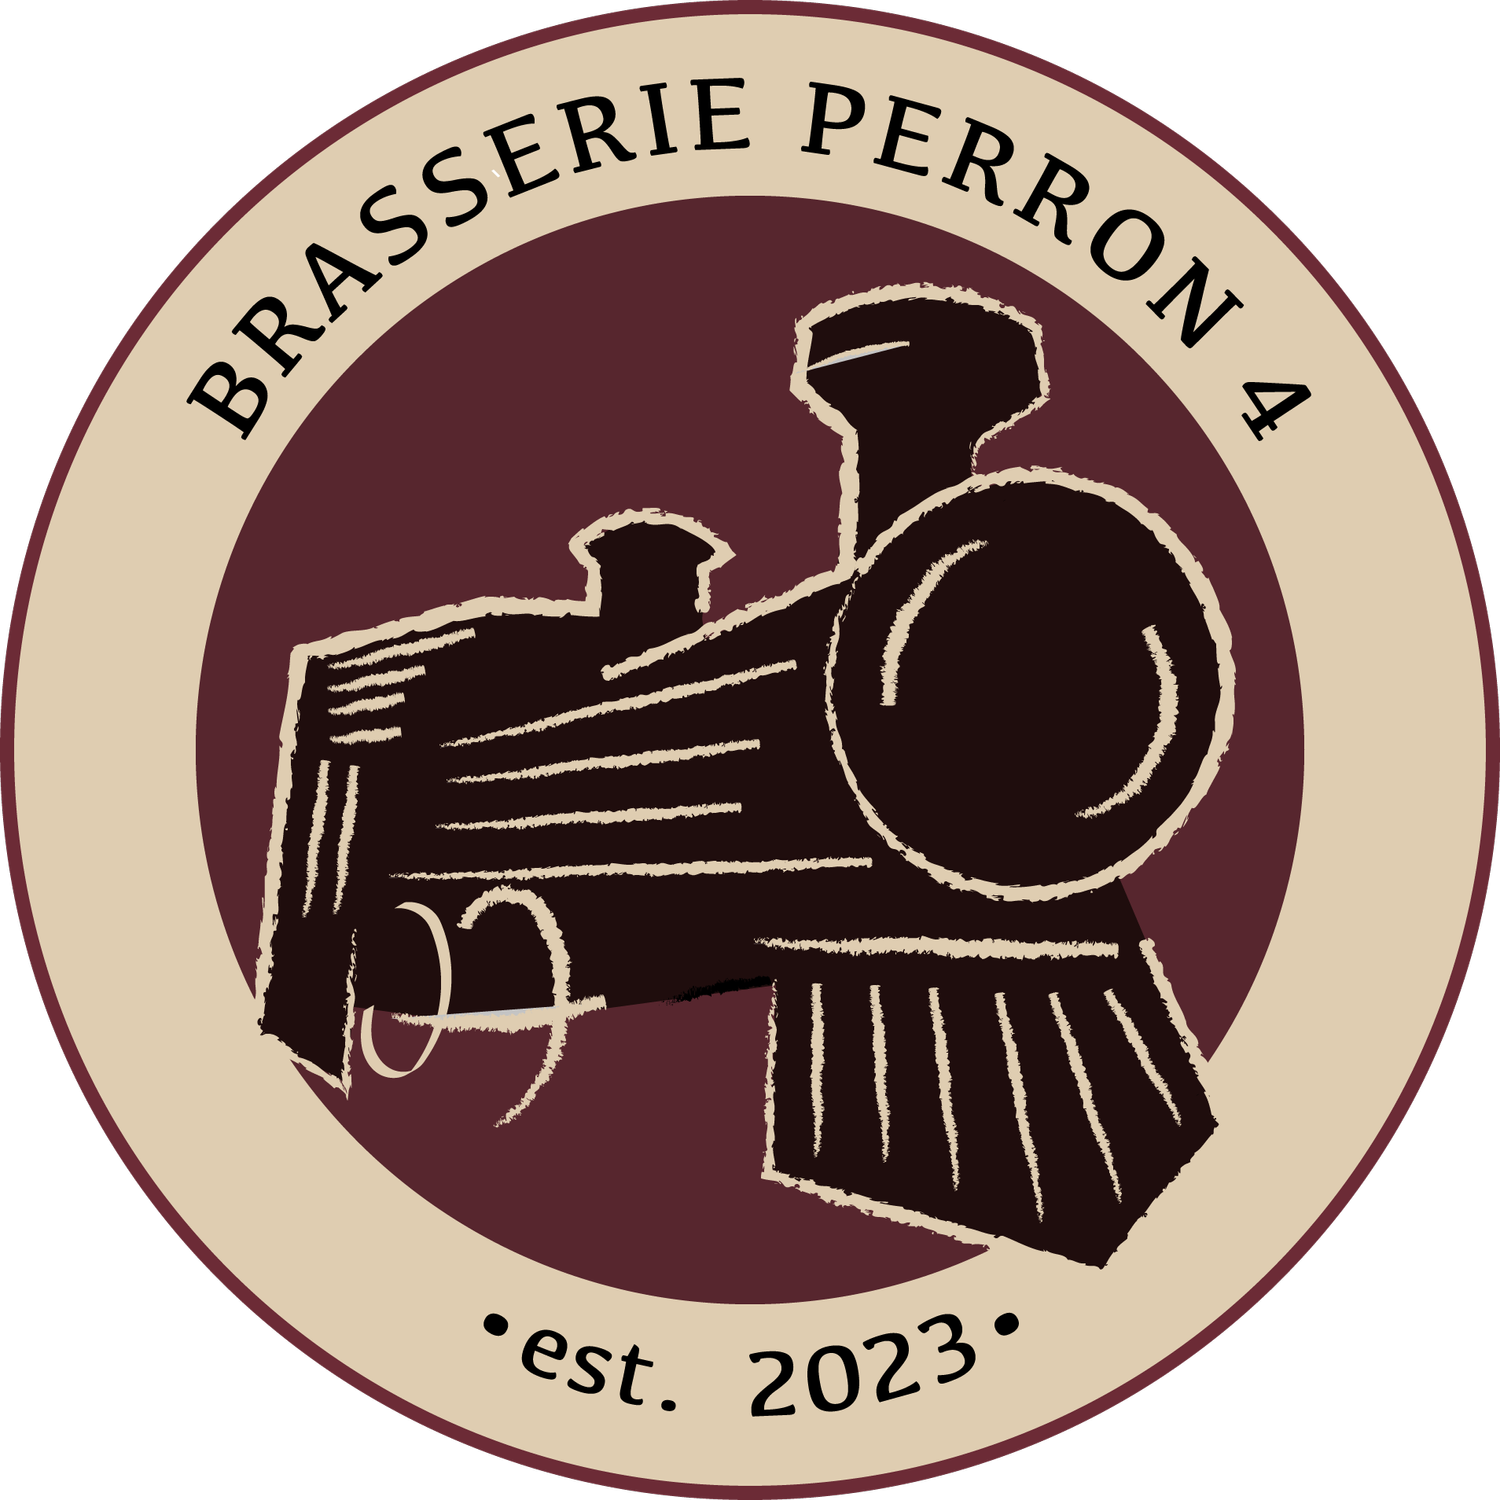 Brasserie Perron 4